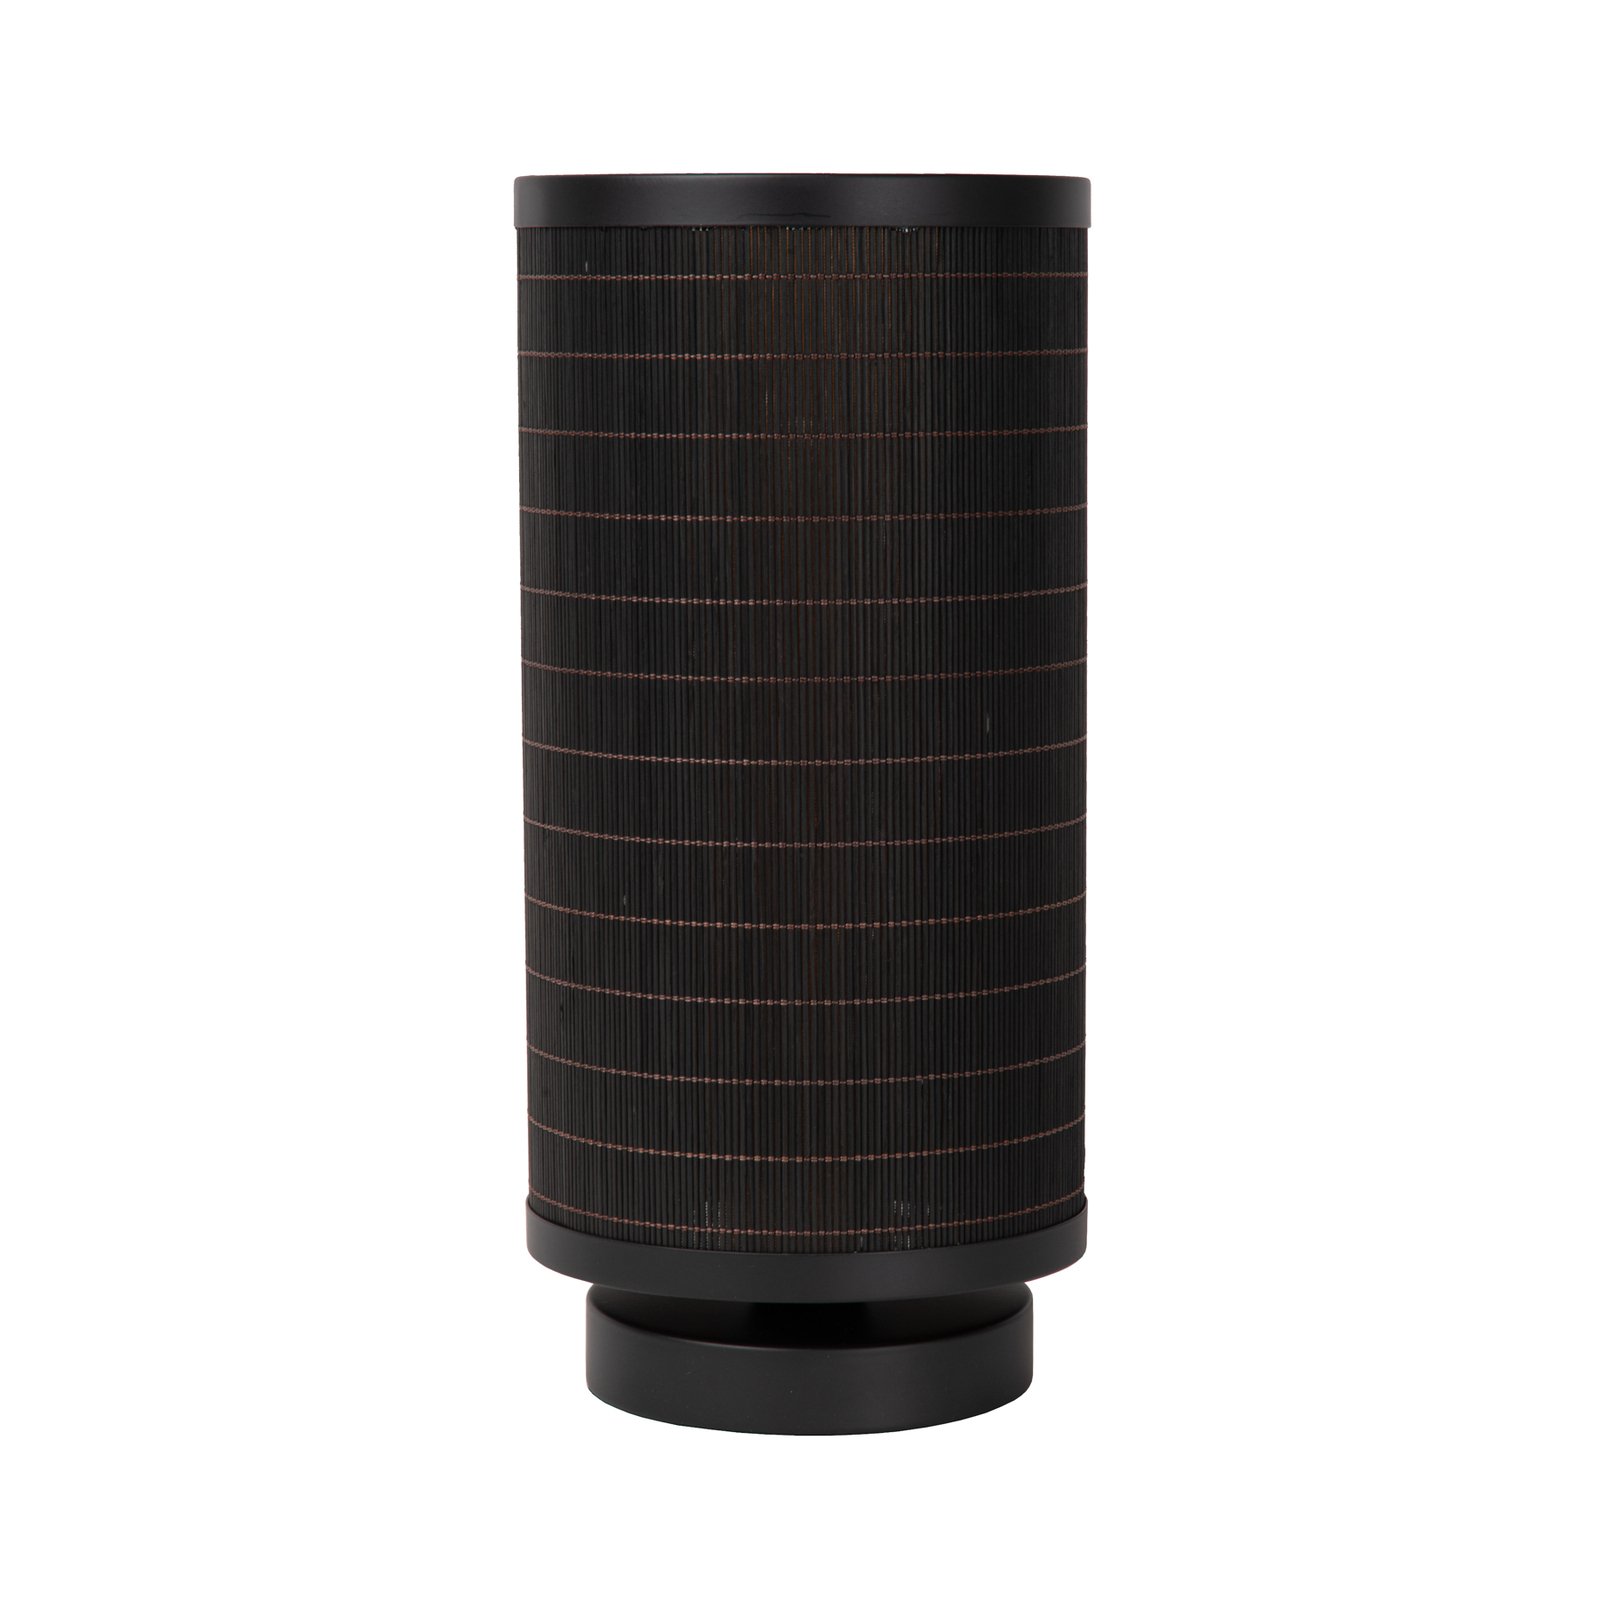 Bordslampa Tagalog av bambu, svart